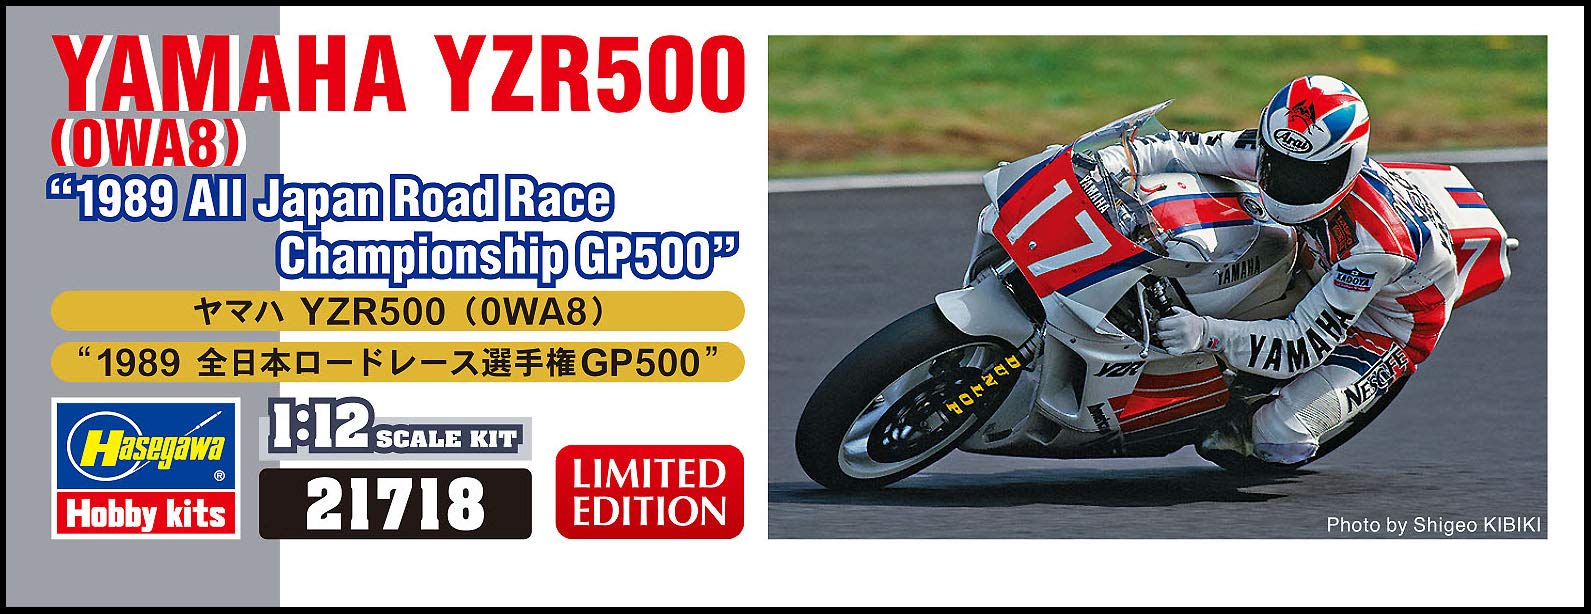 Hasegawa 21718 Yamaha YZR500 OWA8 „1989 All Japan Road Race Championship GP500“ Bausatz im Maßstab 1/12